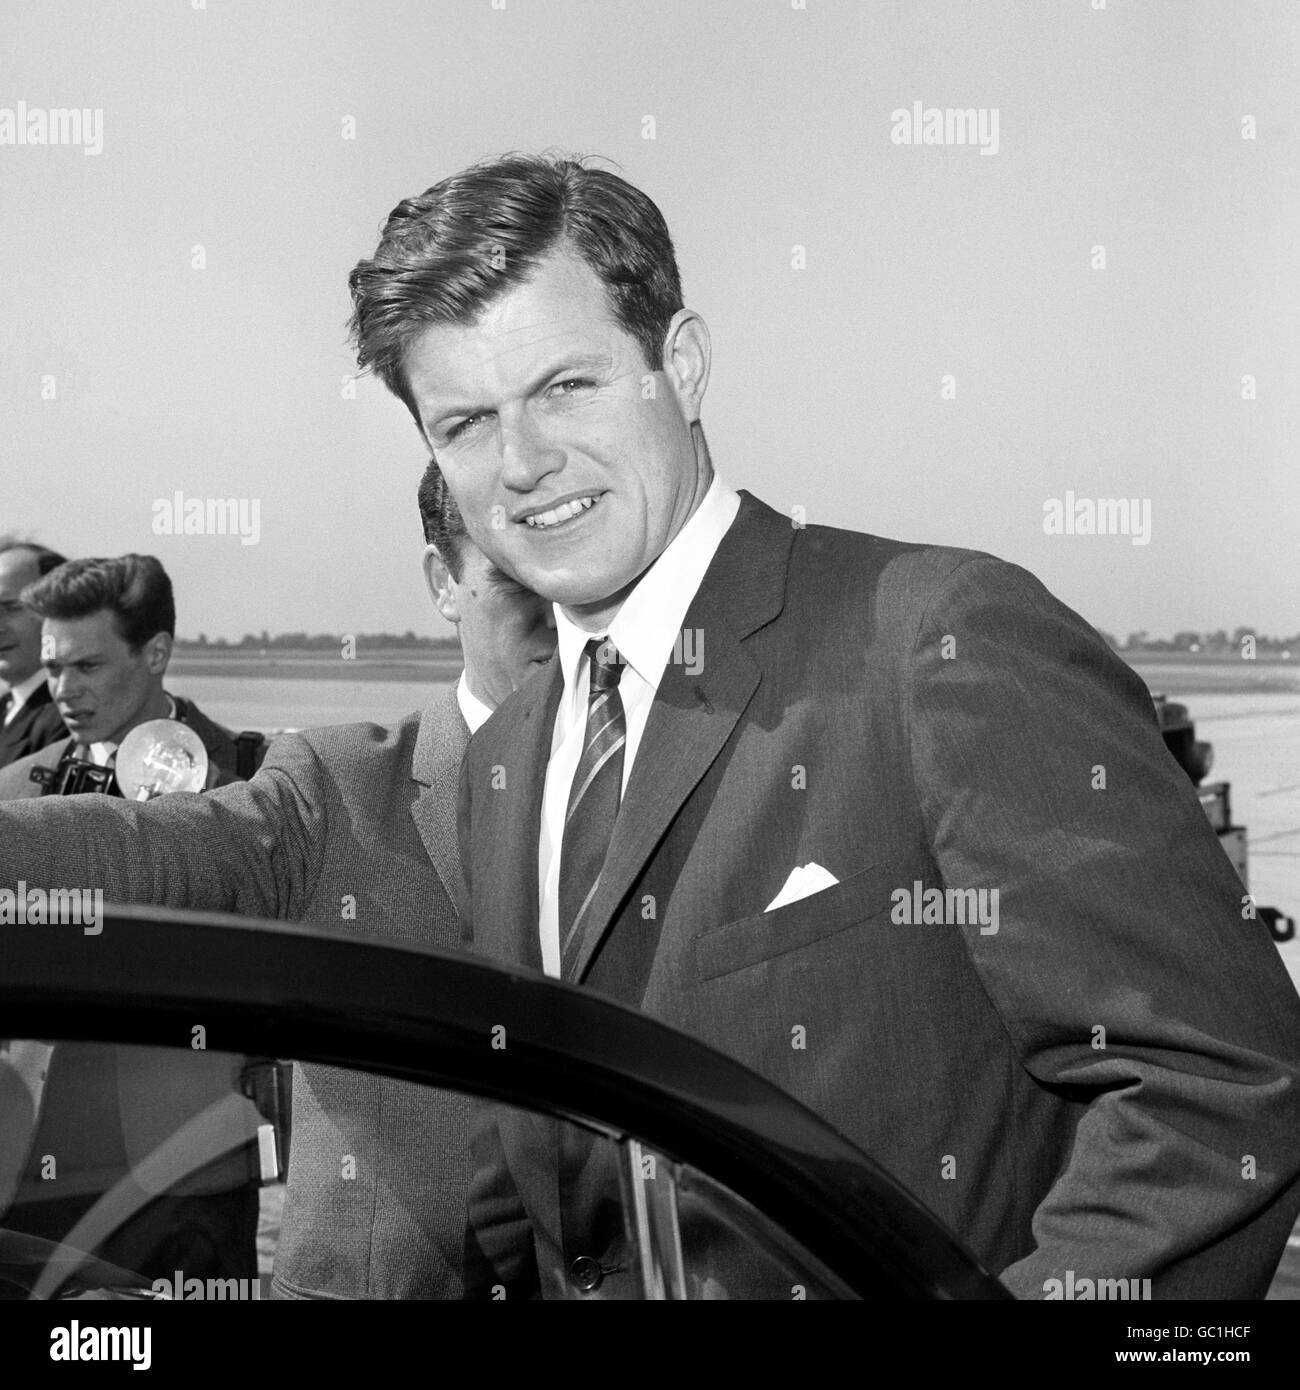 Edward Kennedy, jüngerer Bruder des US-Präsidenten John F. Kennedy, auf dem Weg nach Rom am Flughafen London. Stockfoto